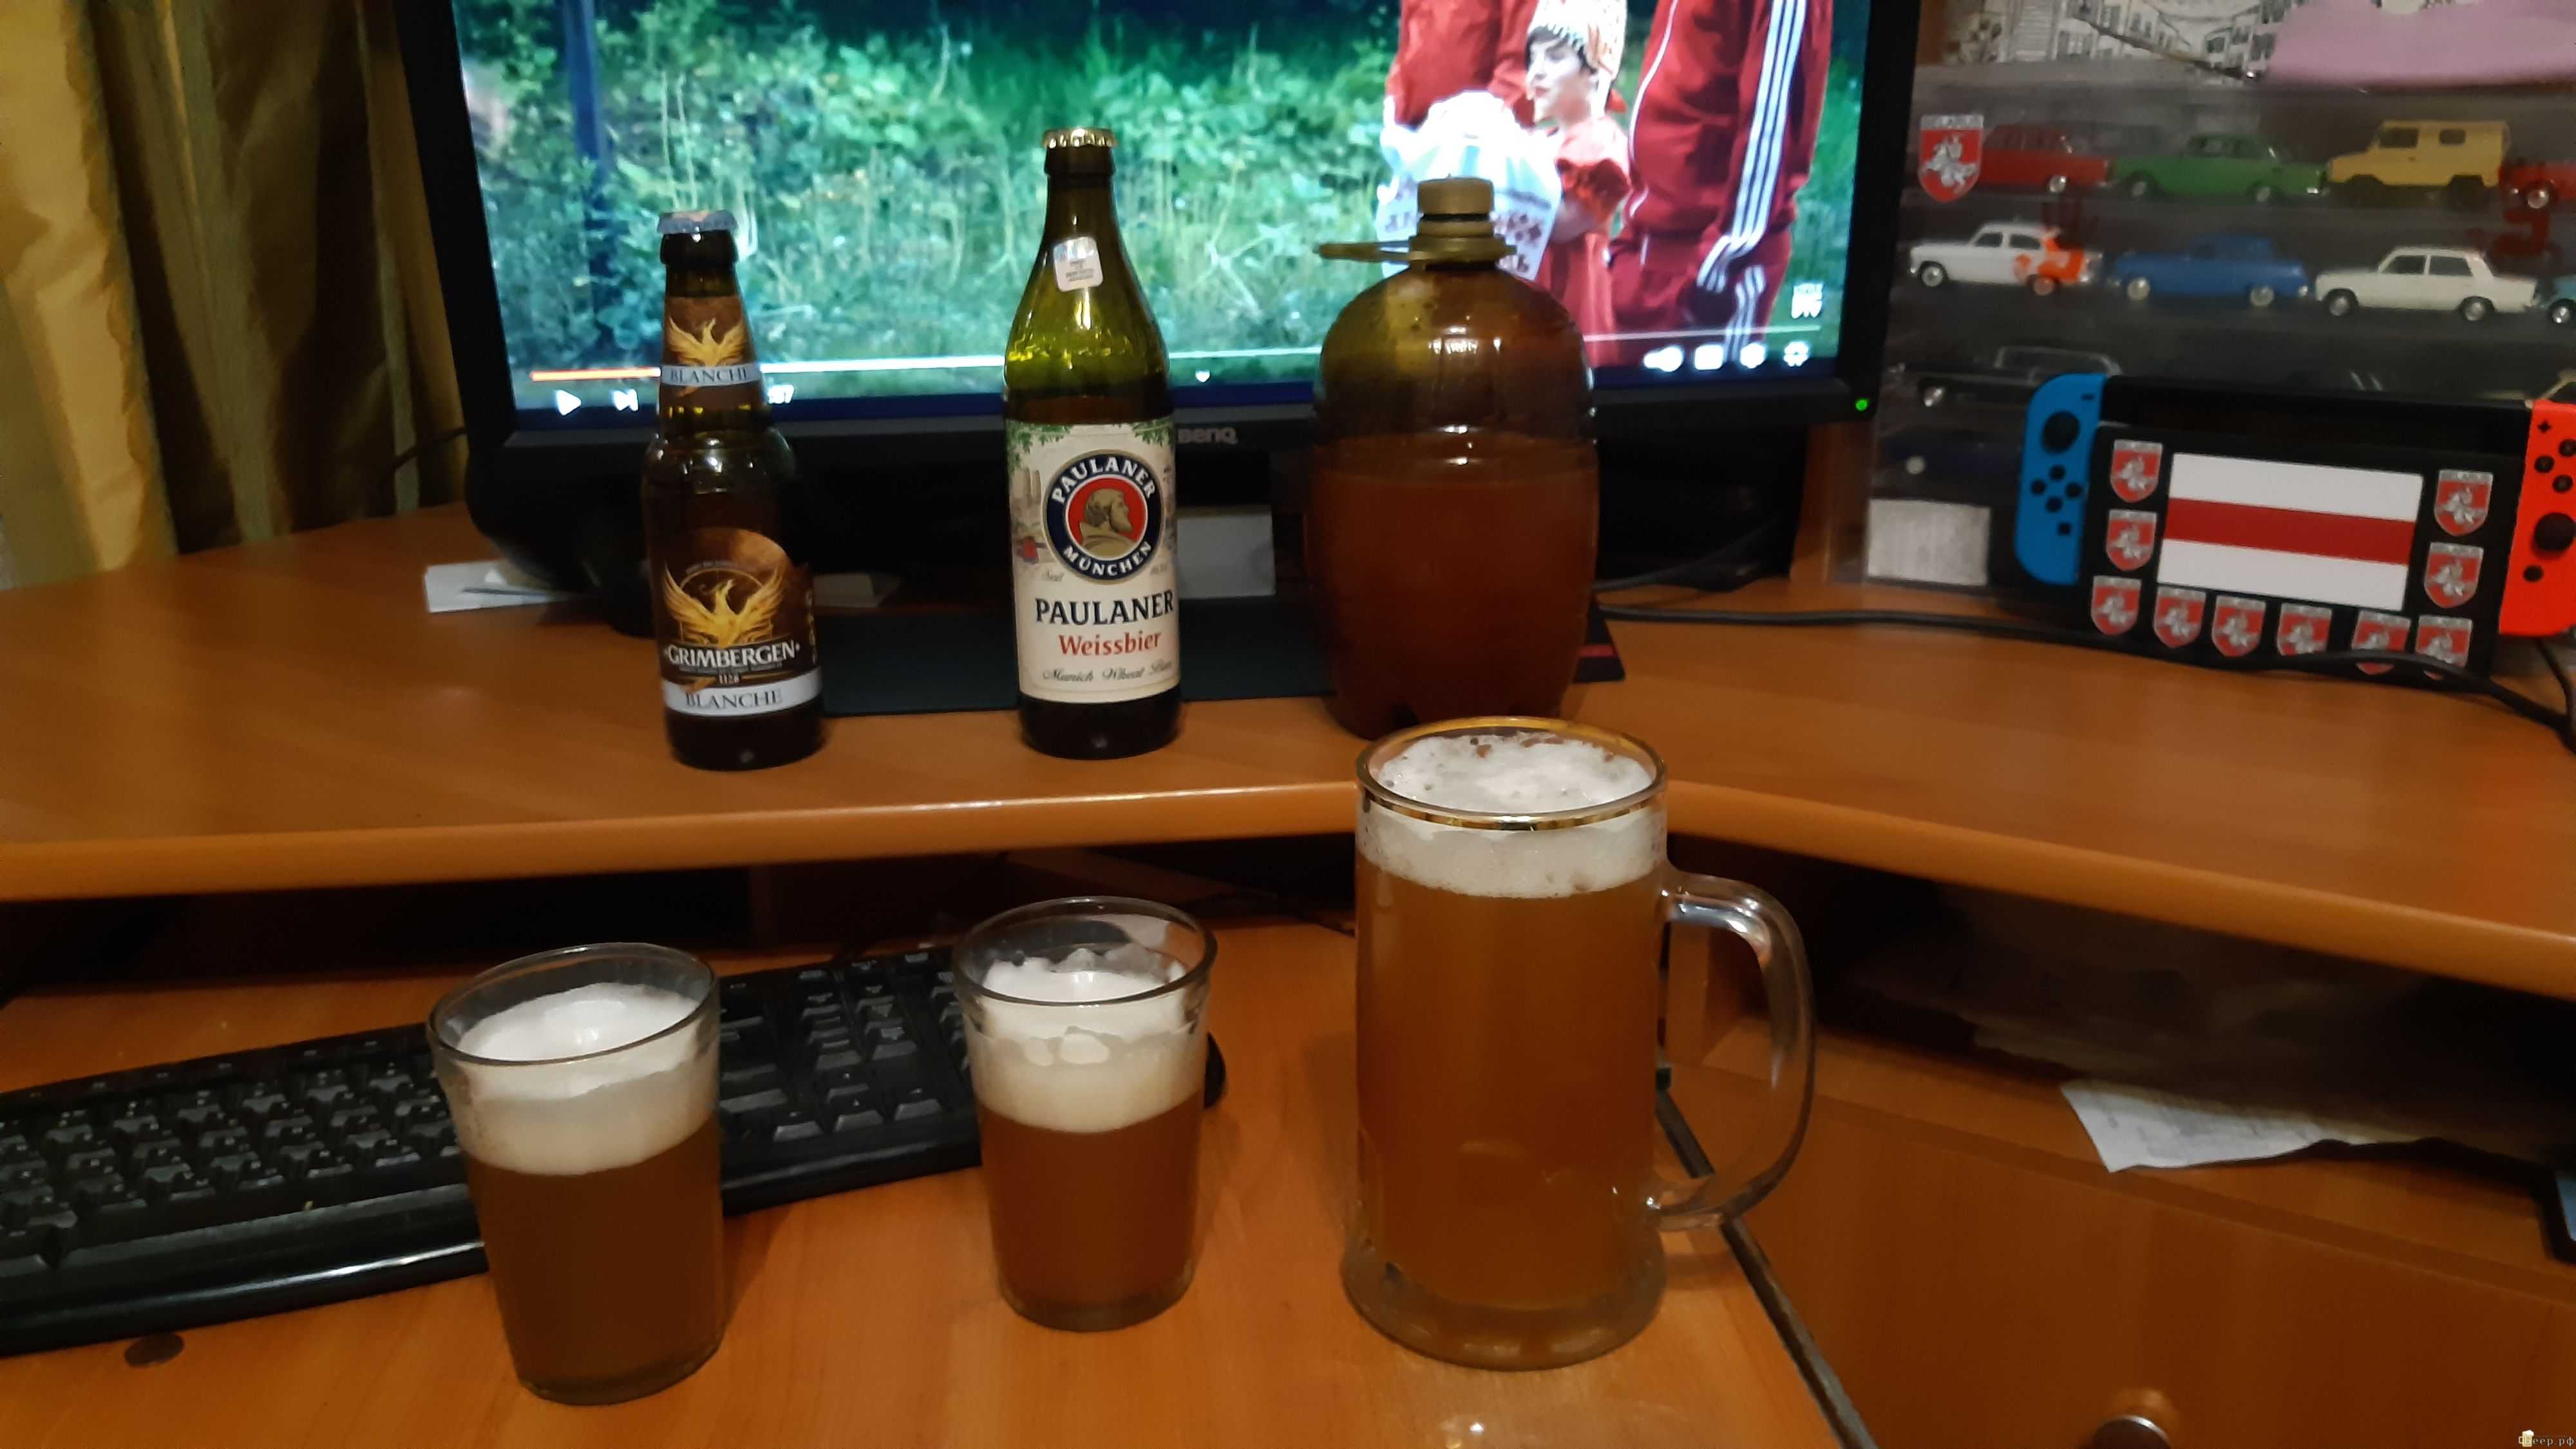 Paulaner hefe weissbier: обзор пива пауланер, характеристики, отзывы